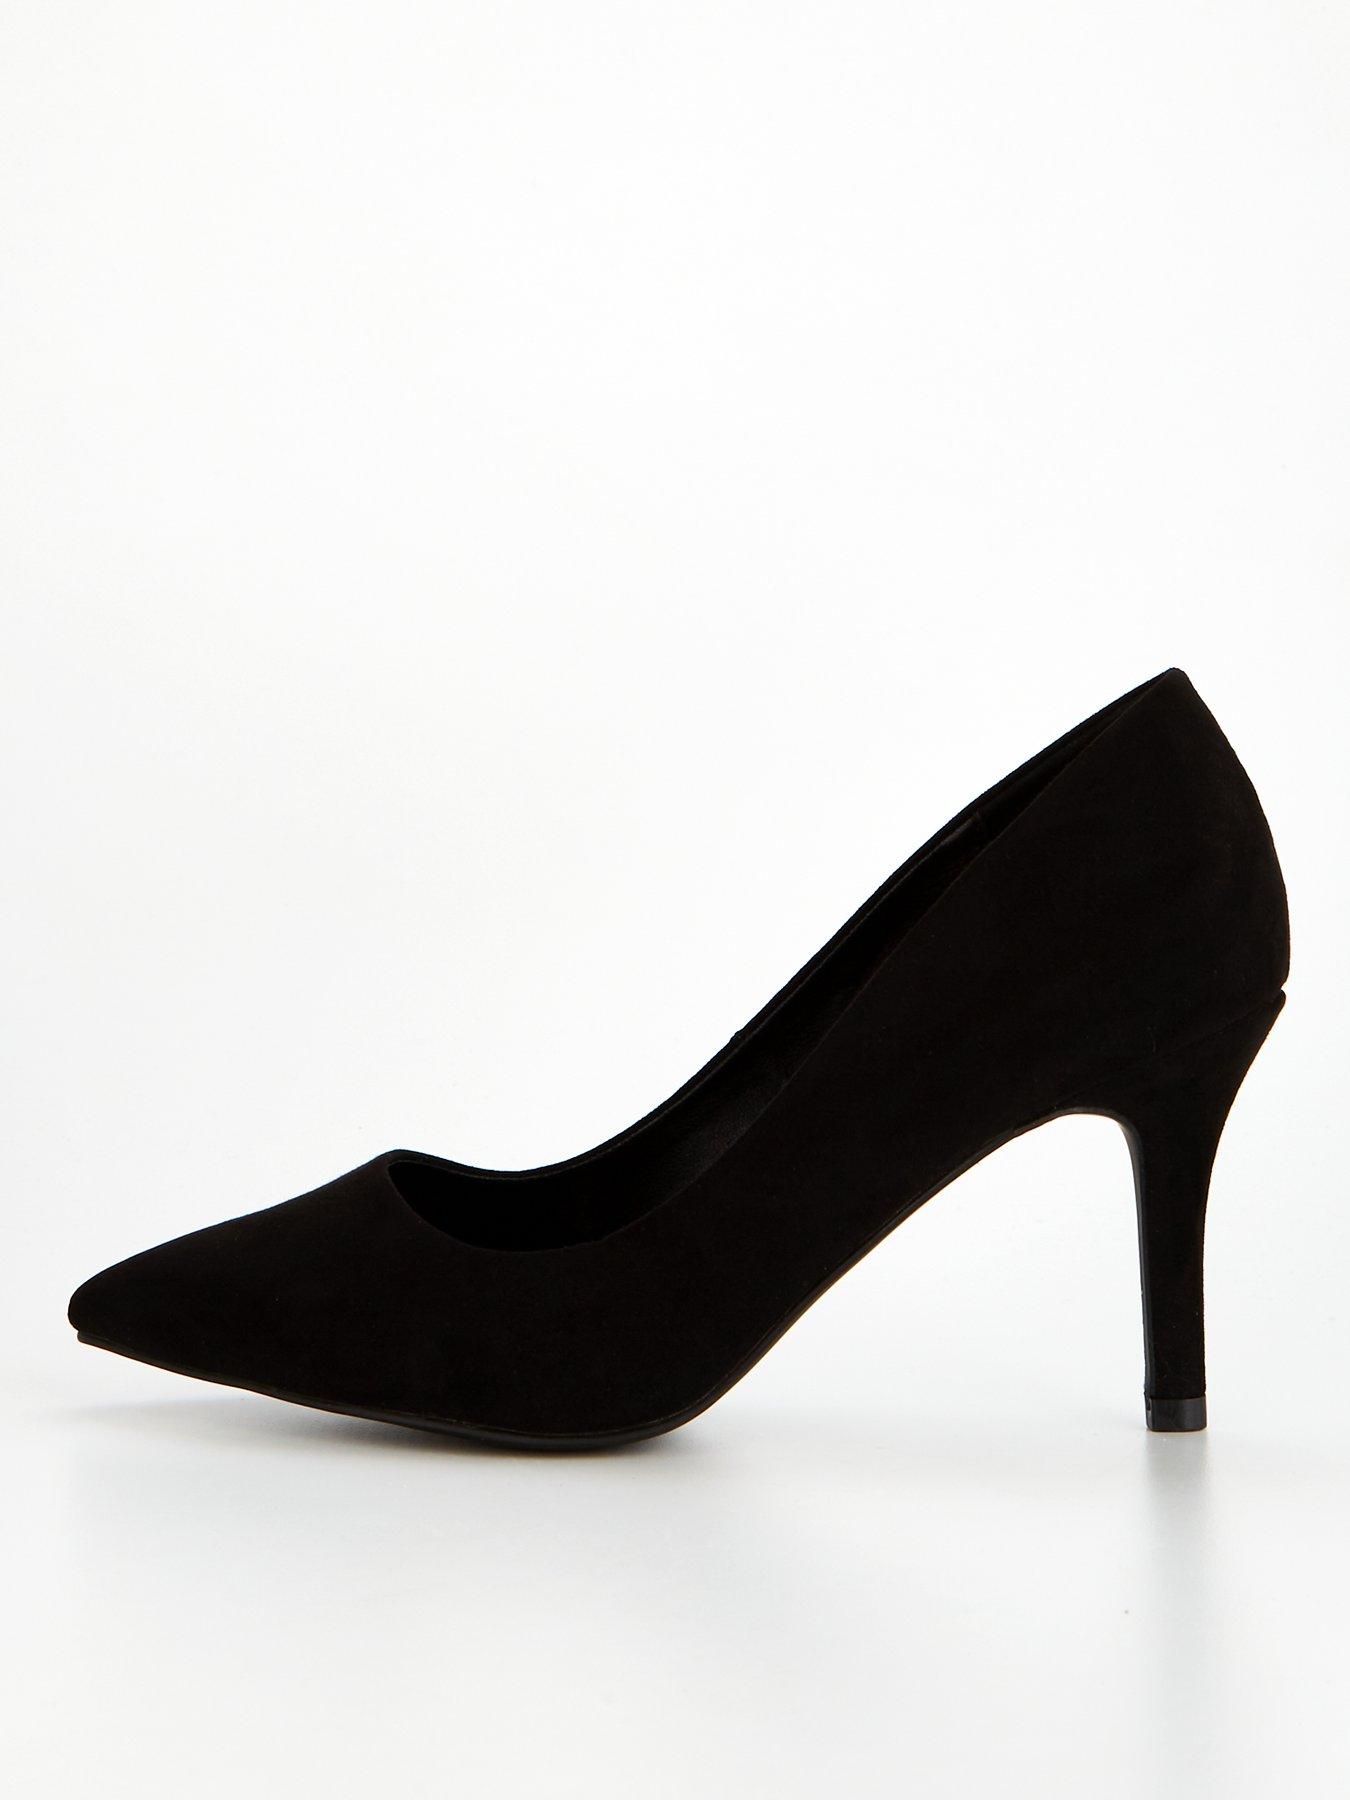 3 Inch Heels | Buy Online from Australia | OtherWorld Shoes